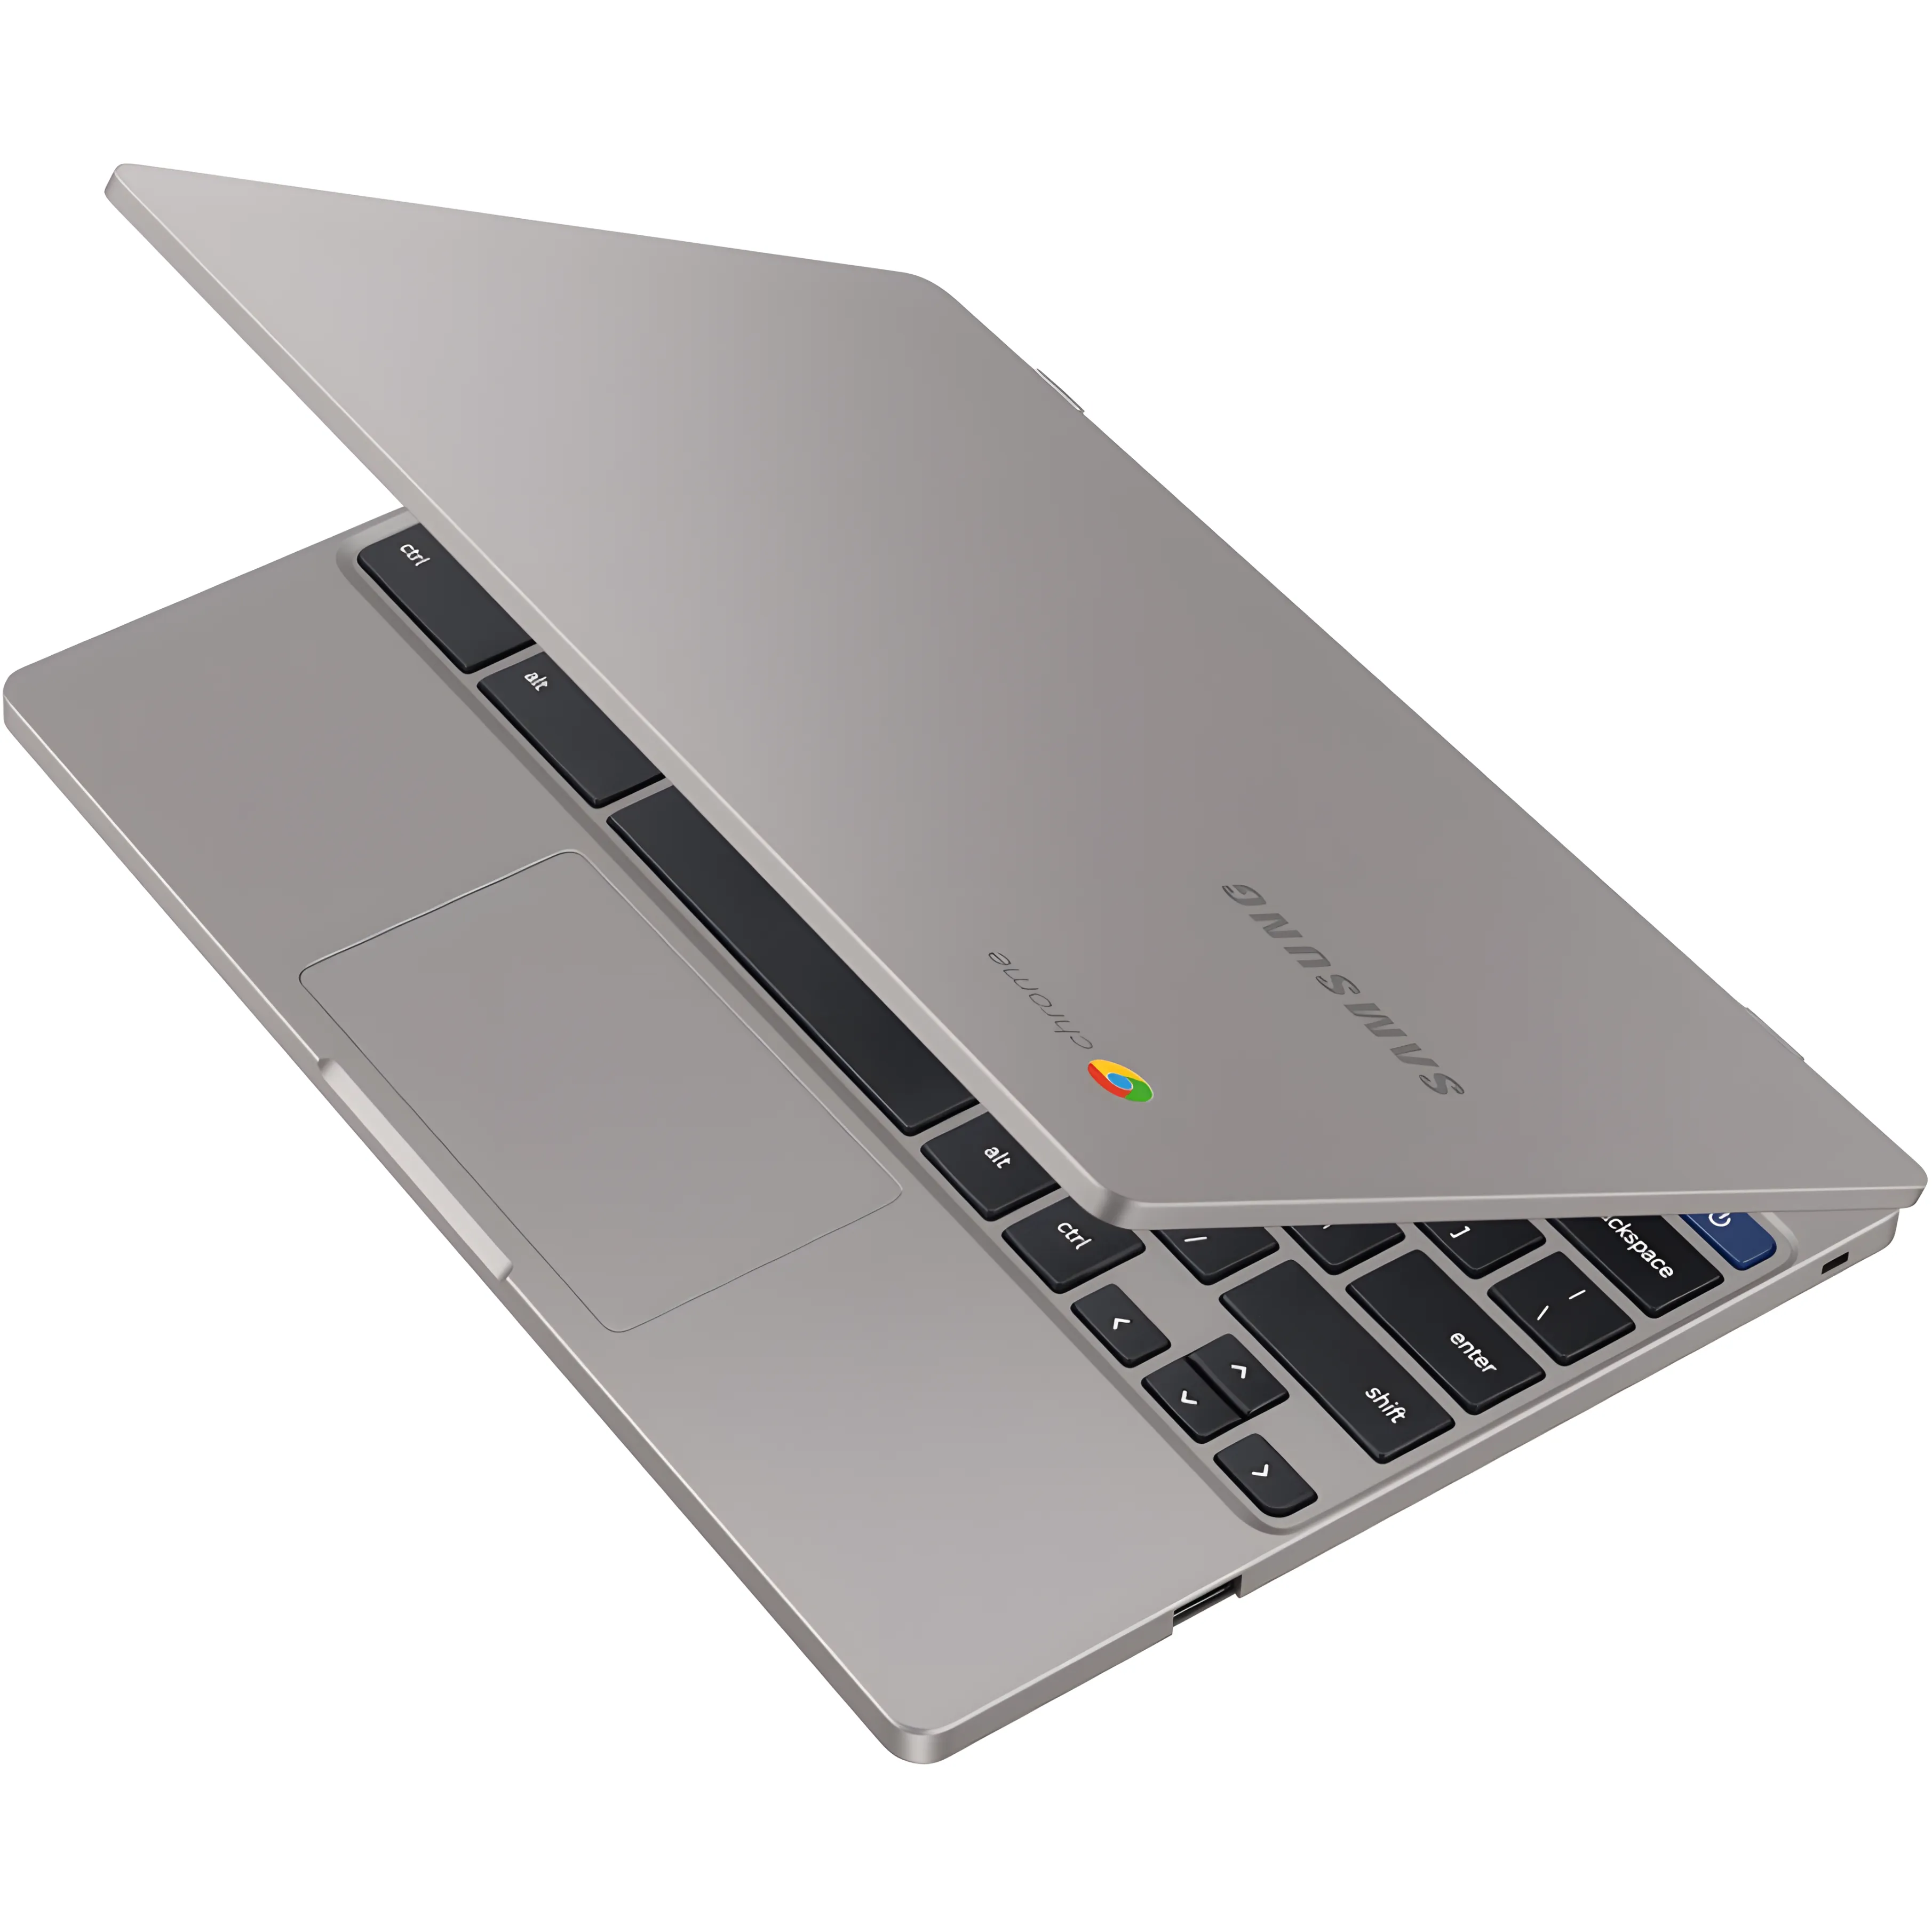 Free Chromebook4 Laptops Worth £299 For Winners